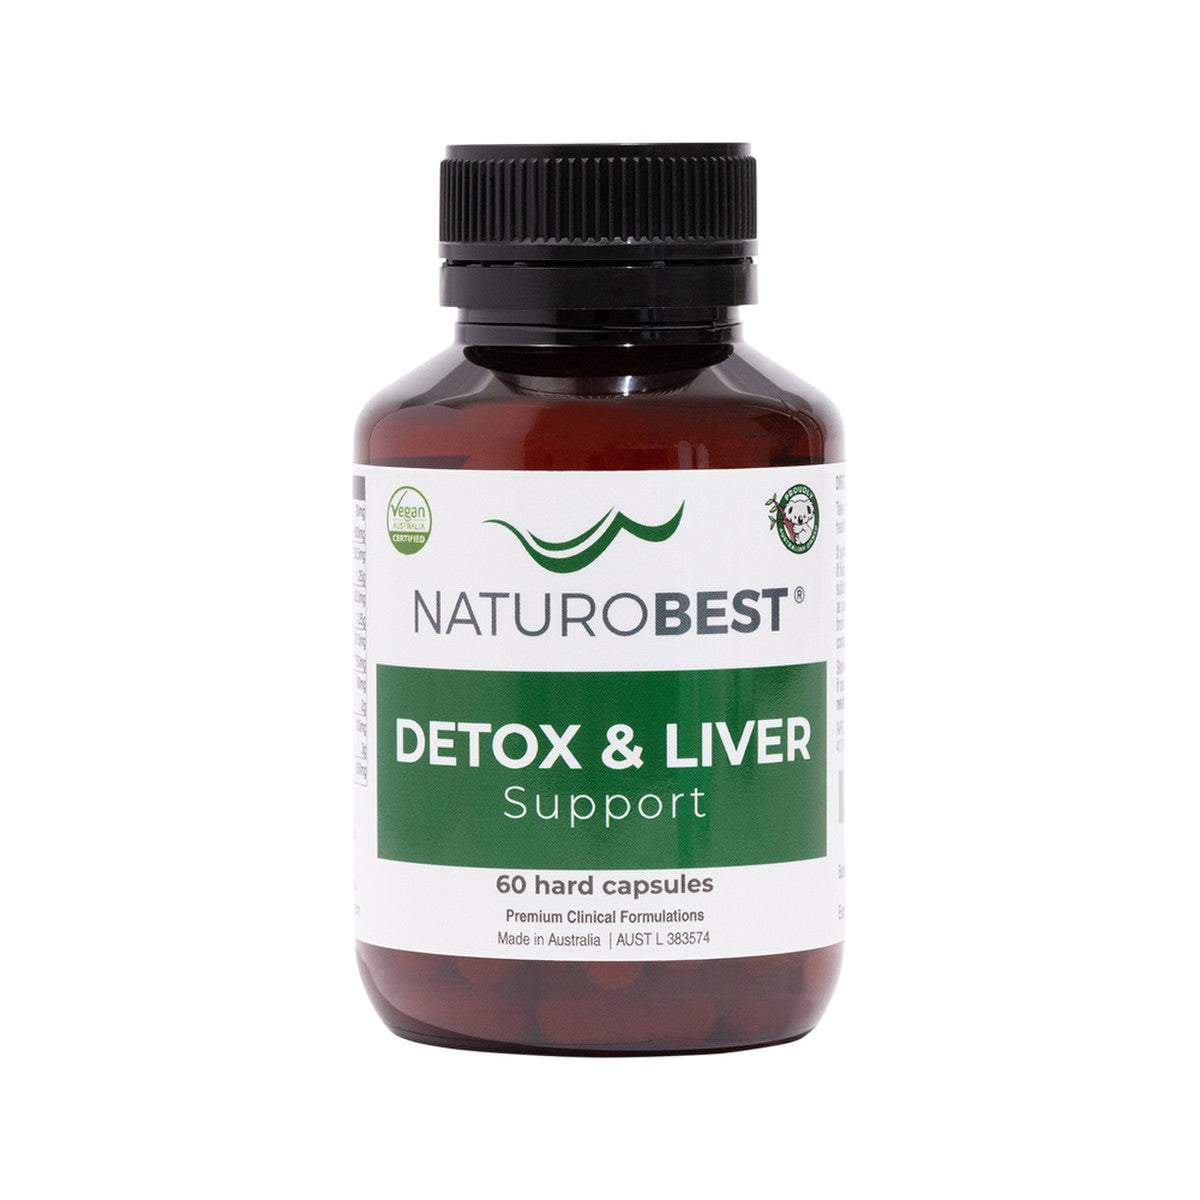 NaturoBest - Detox & Liver Support